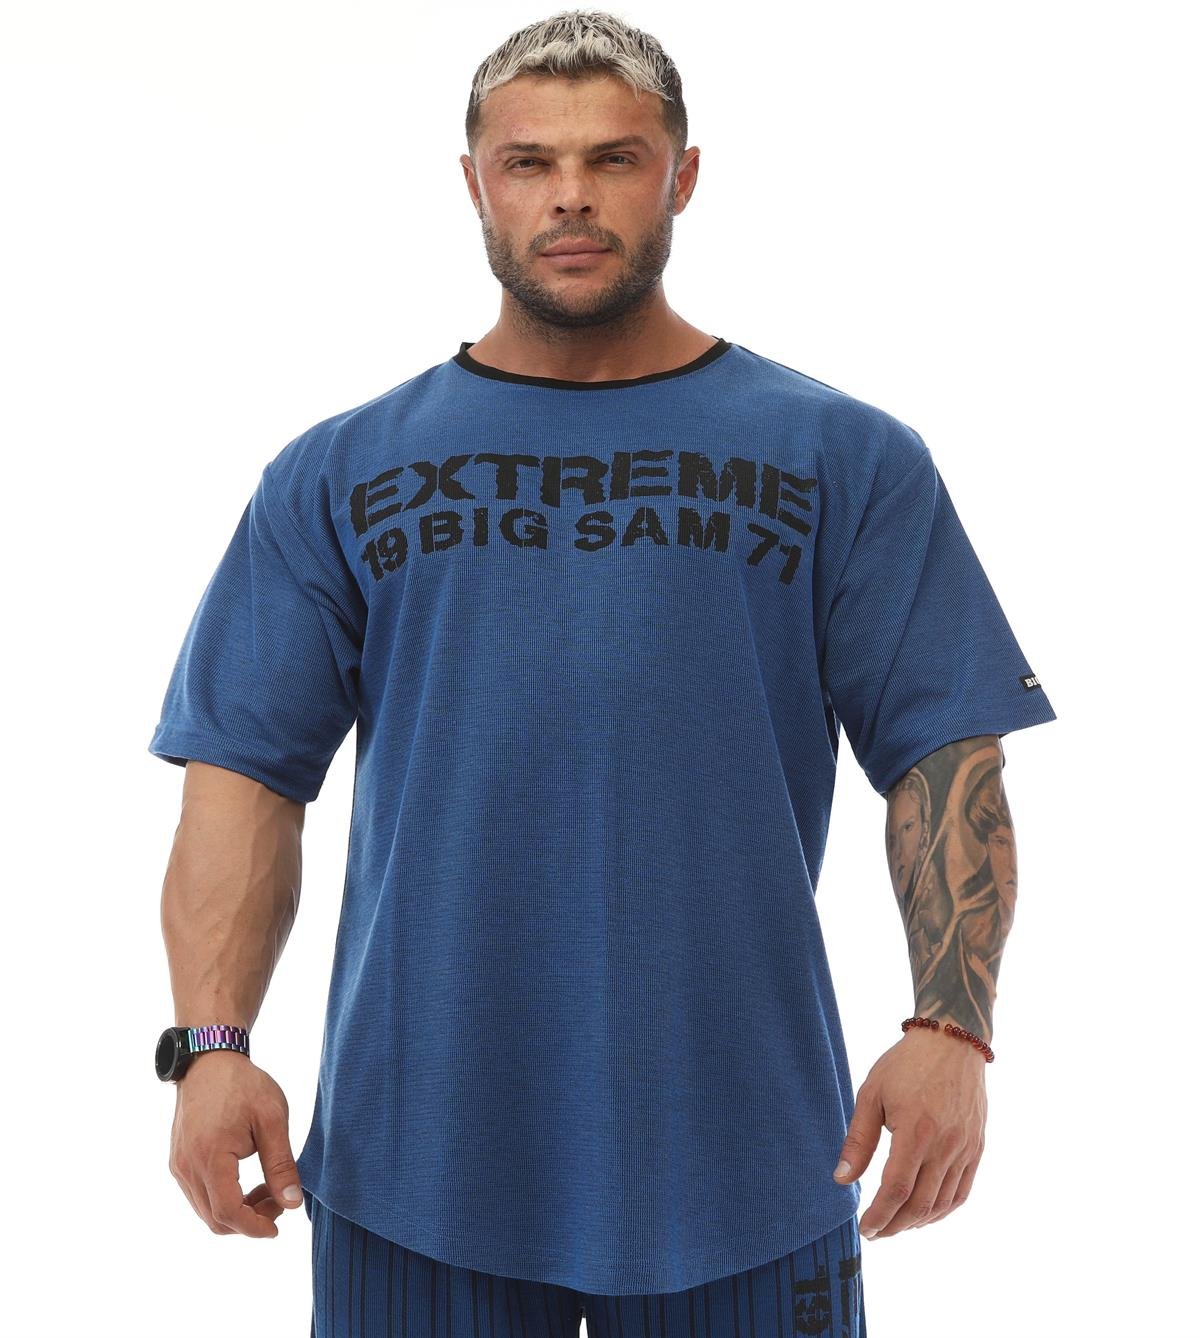 BGSM Blue Top T-shirt 3330 Rag Oversize Gym